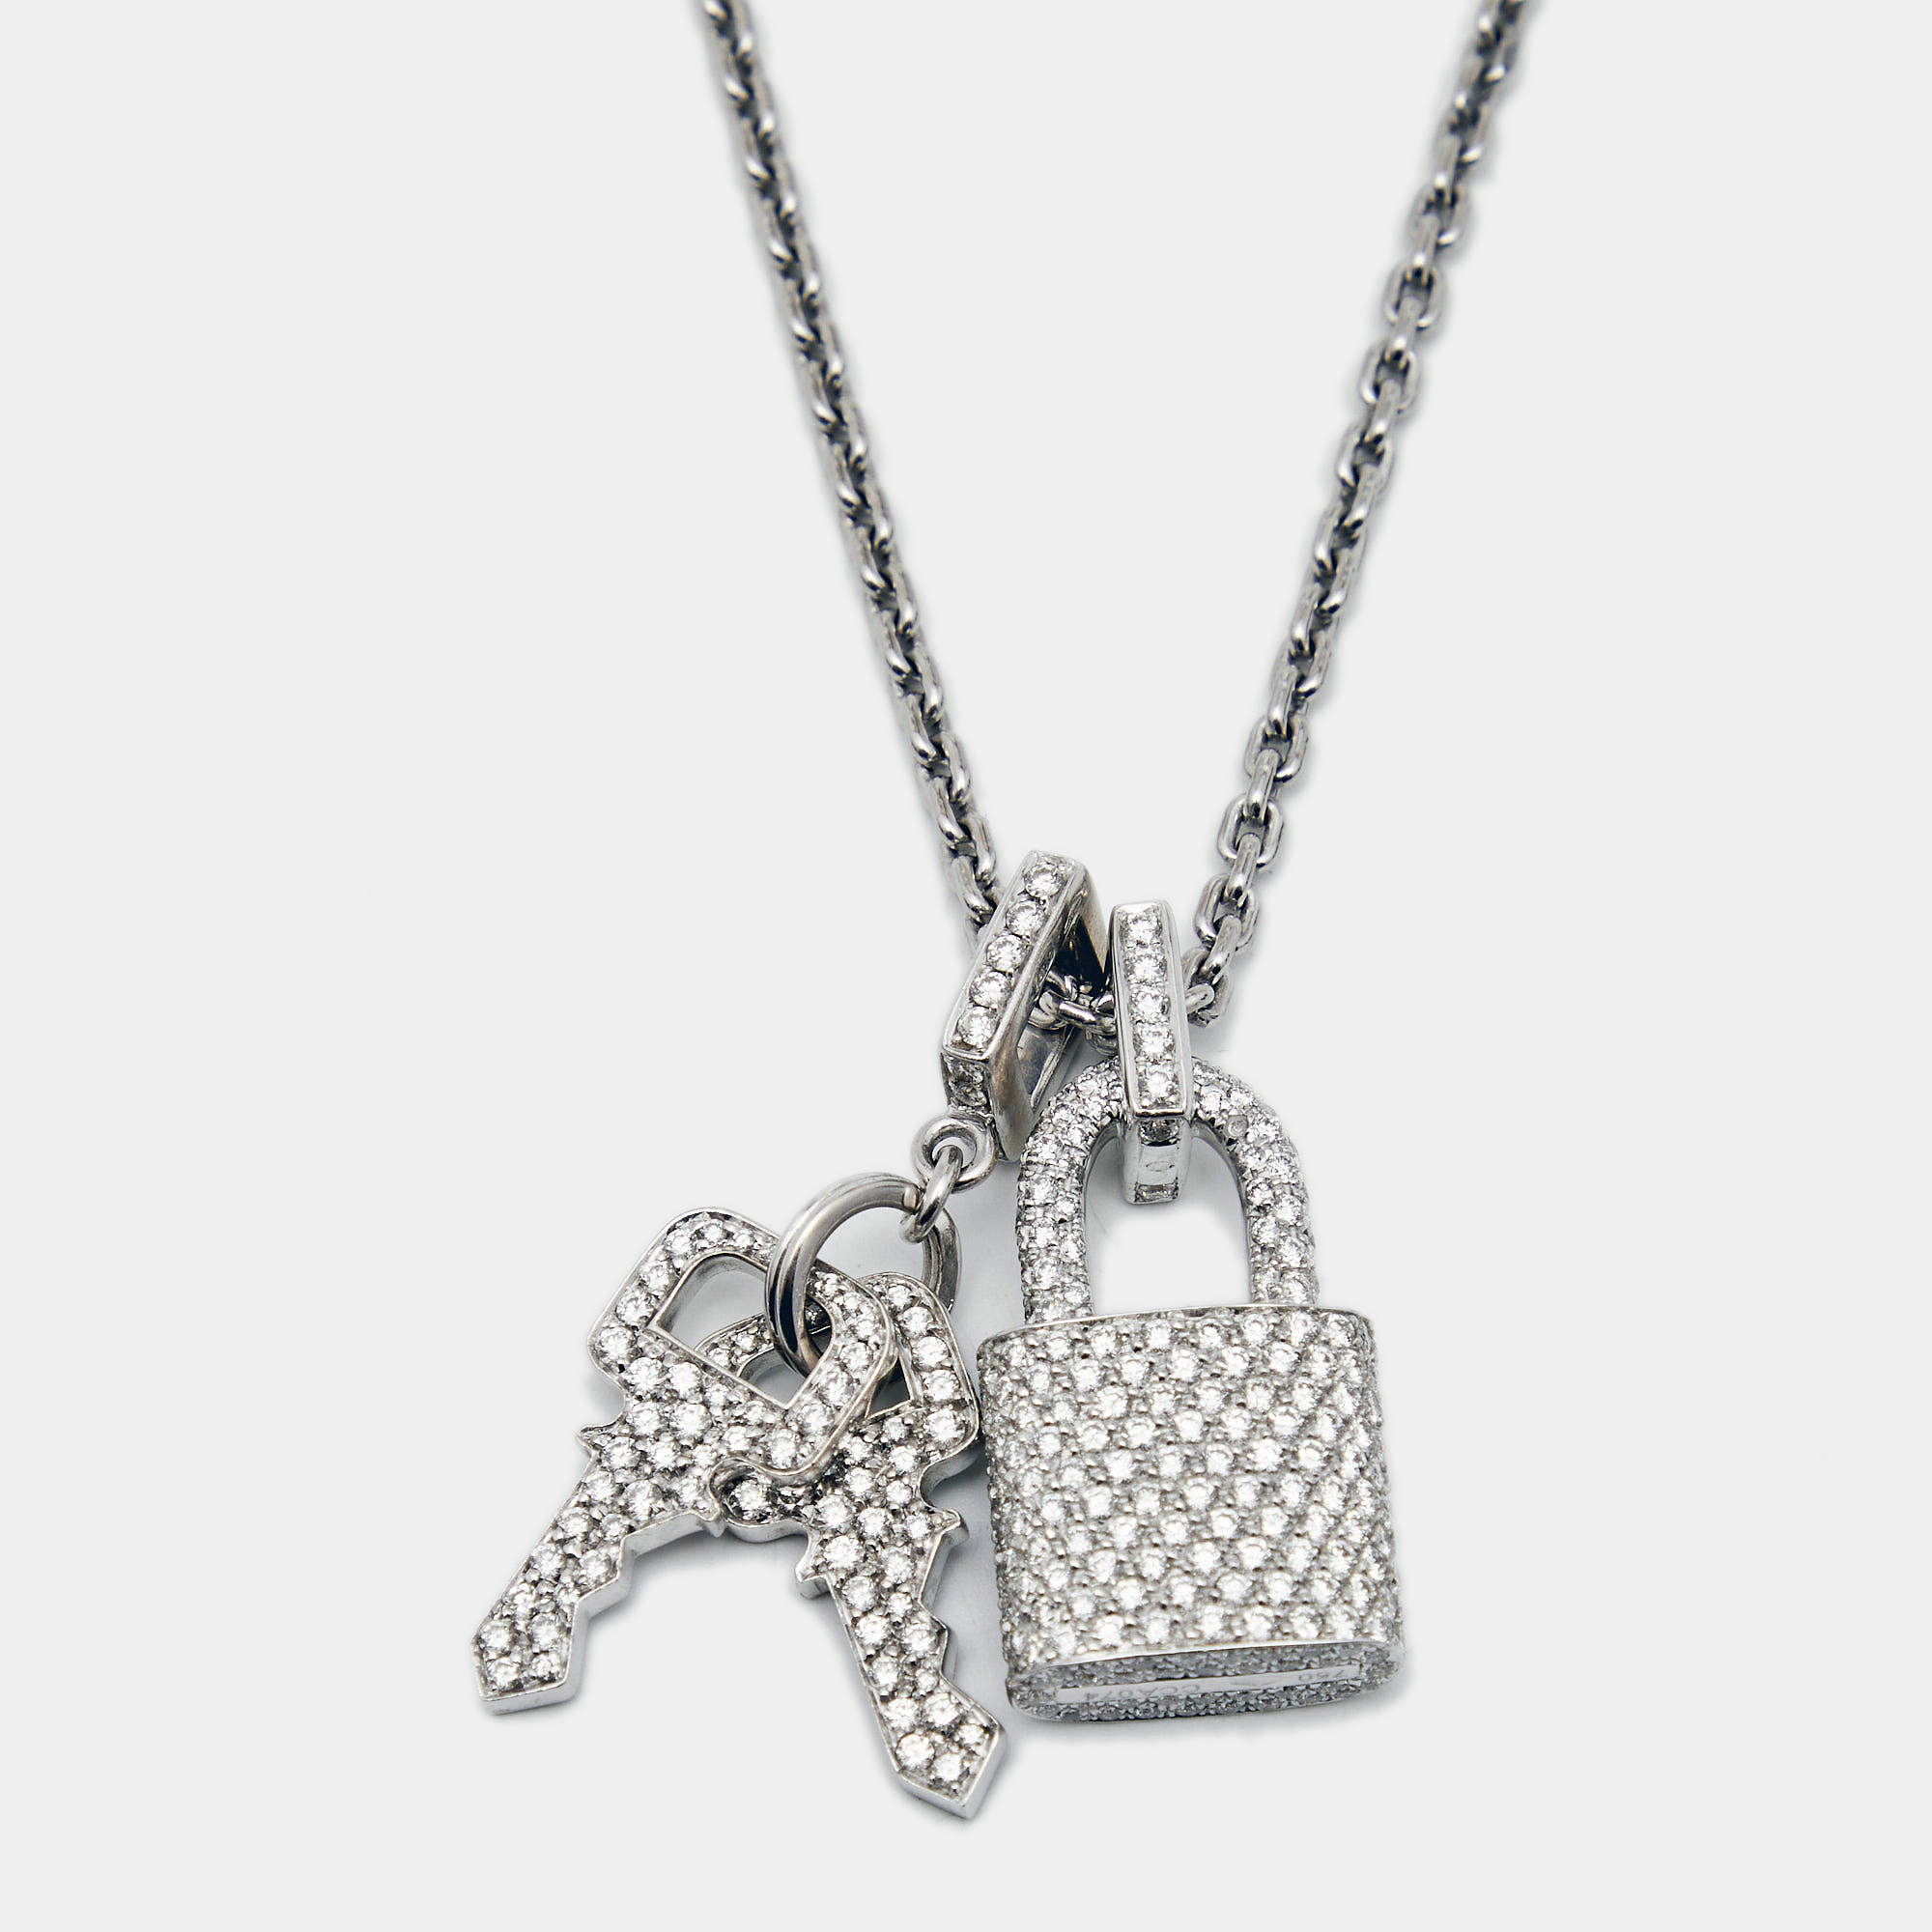 18 Karat White Gold and Diamond Lockit Pendant-Necklace by Louis Vuitton  (Co.) on artnet